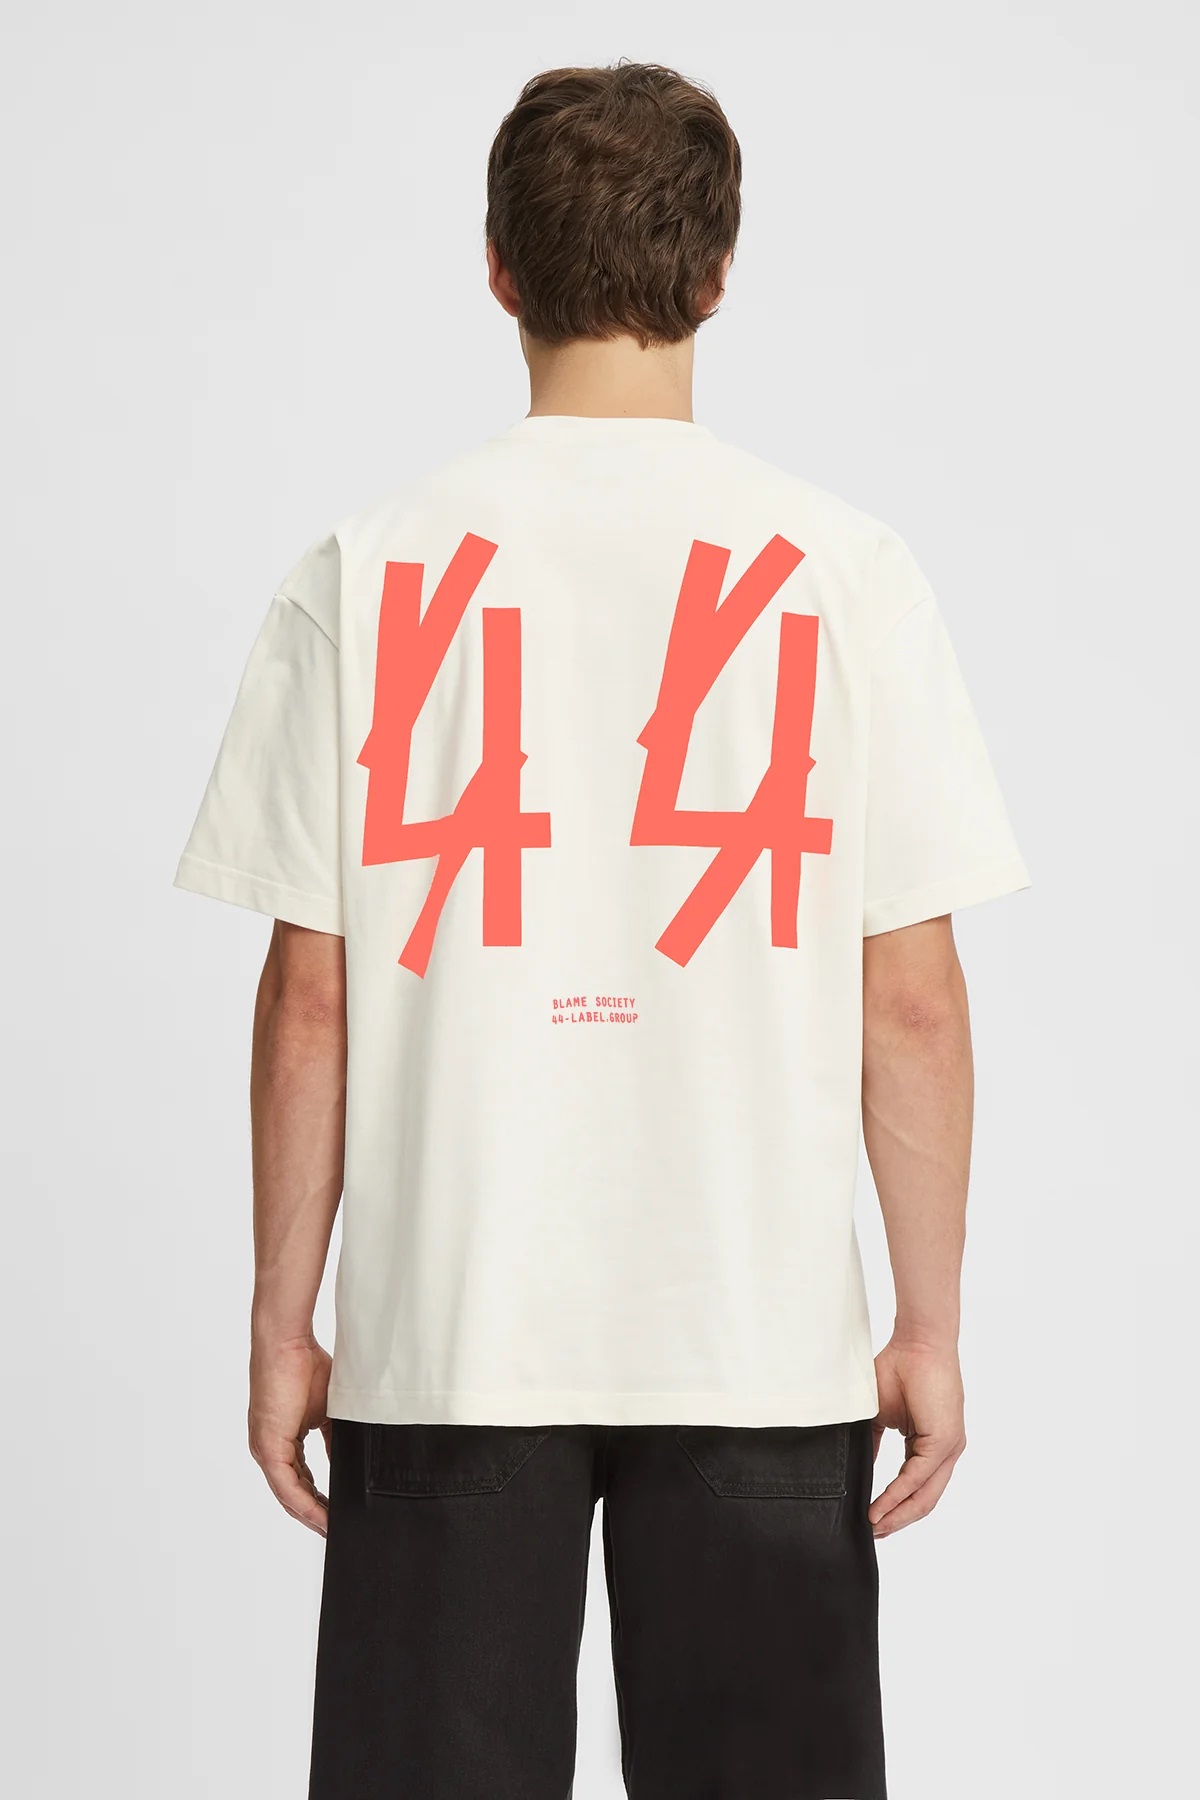 44 LABEL GROUP Original T-Shirt in Bones/Neon Print S